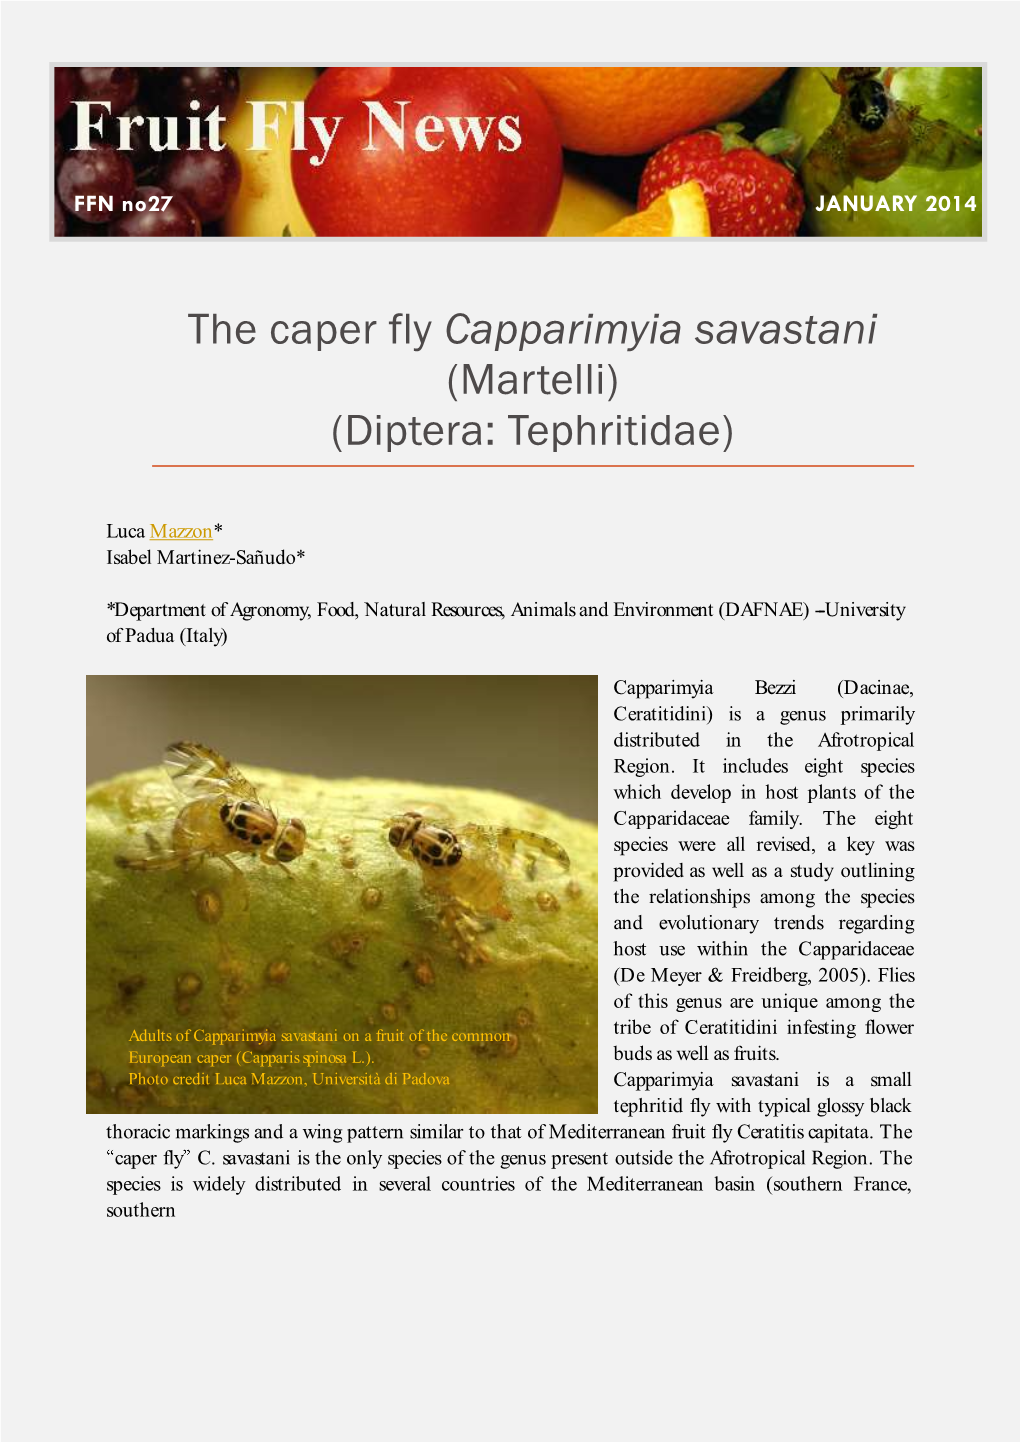 The Caper Fly Capparimyia Savastani (Martelli) (Diptera: Tephritidae)